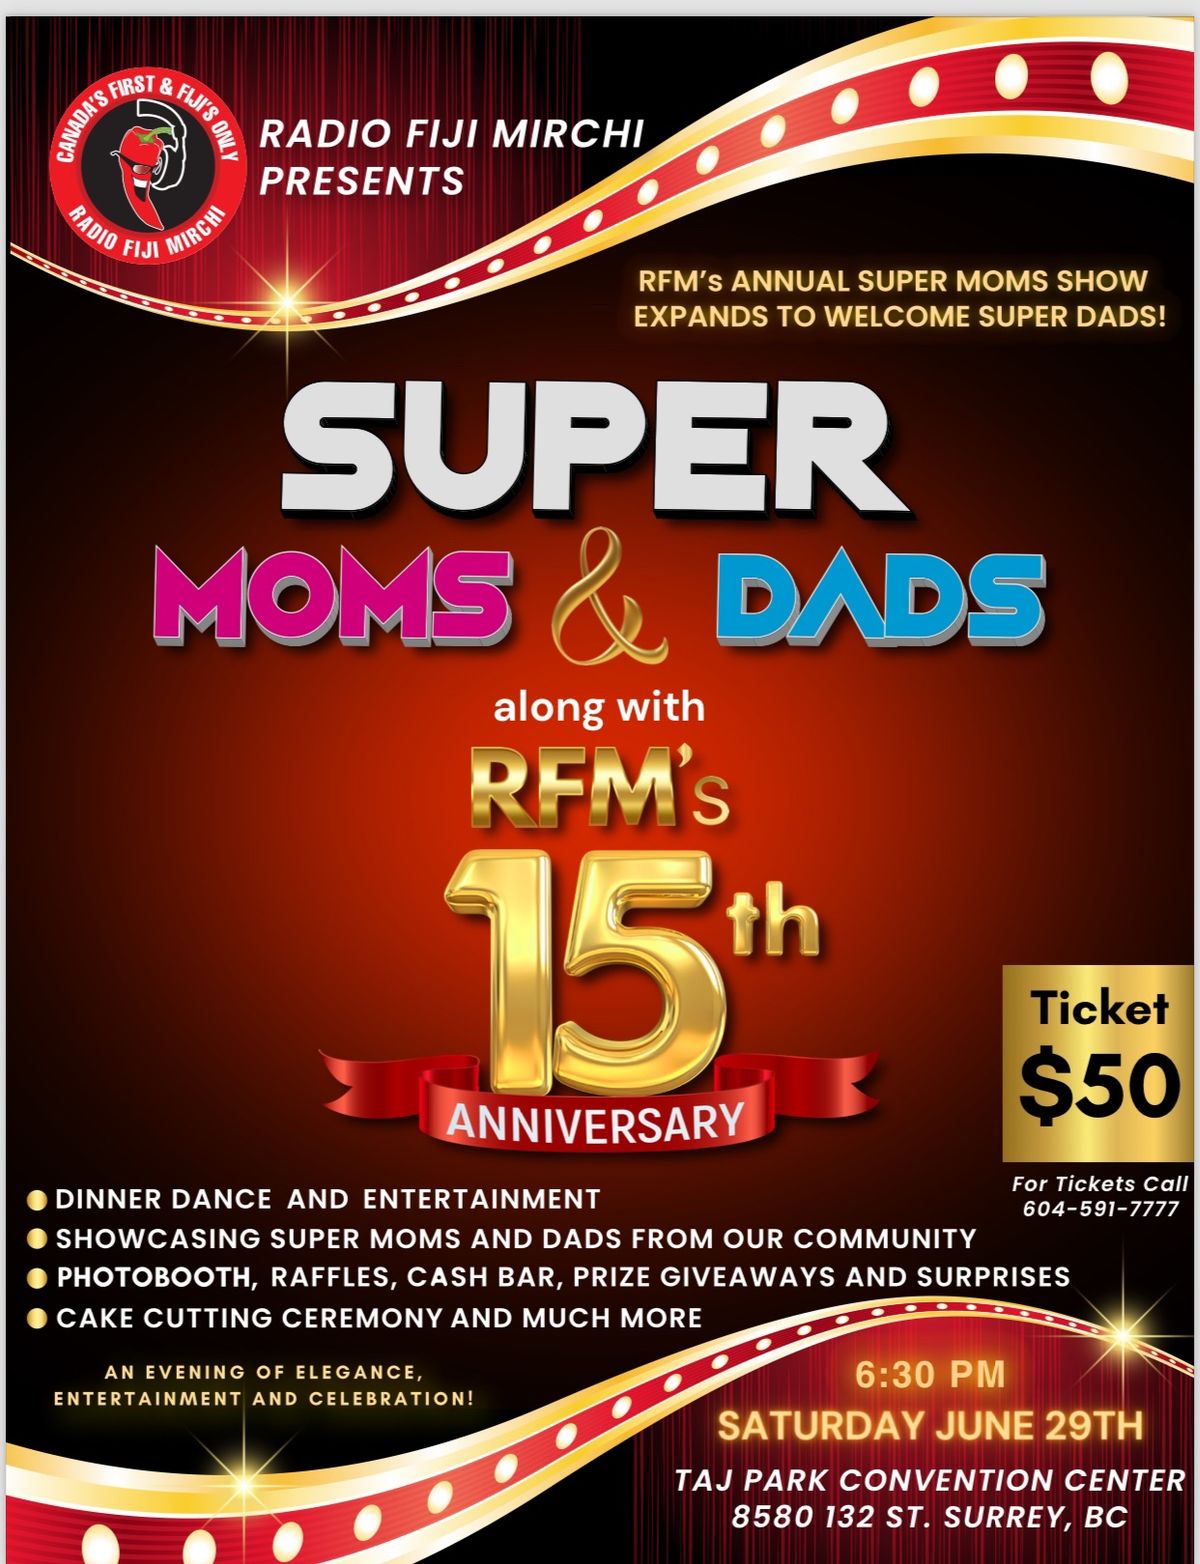 RFM\u2019s SUPER MOMS & SUPER DADS SHOW along with RFM\u2019s 15th ANNIVERSARY CELEBRATIONS!